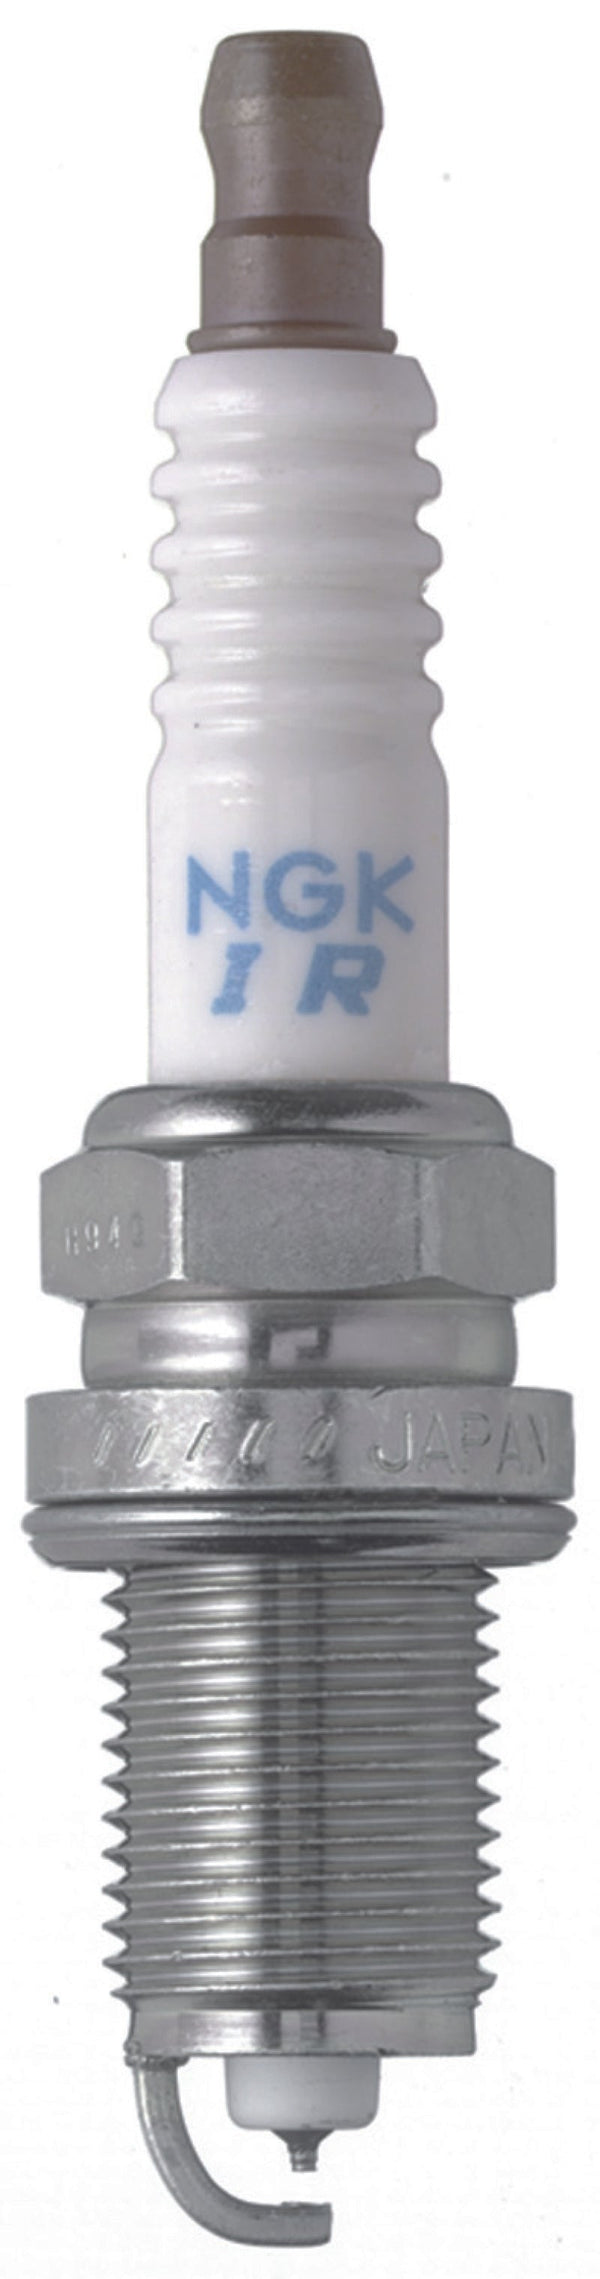 NGK Laser Iridium Spark Plug Box of 4 (IFR5J11) - Premium Spark Plugs from NGK - Just 199.42 SR! Shop now at Motors